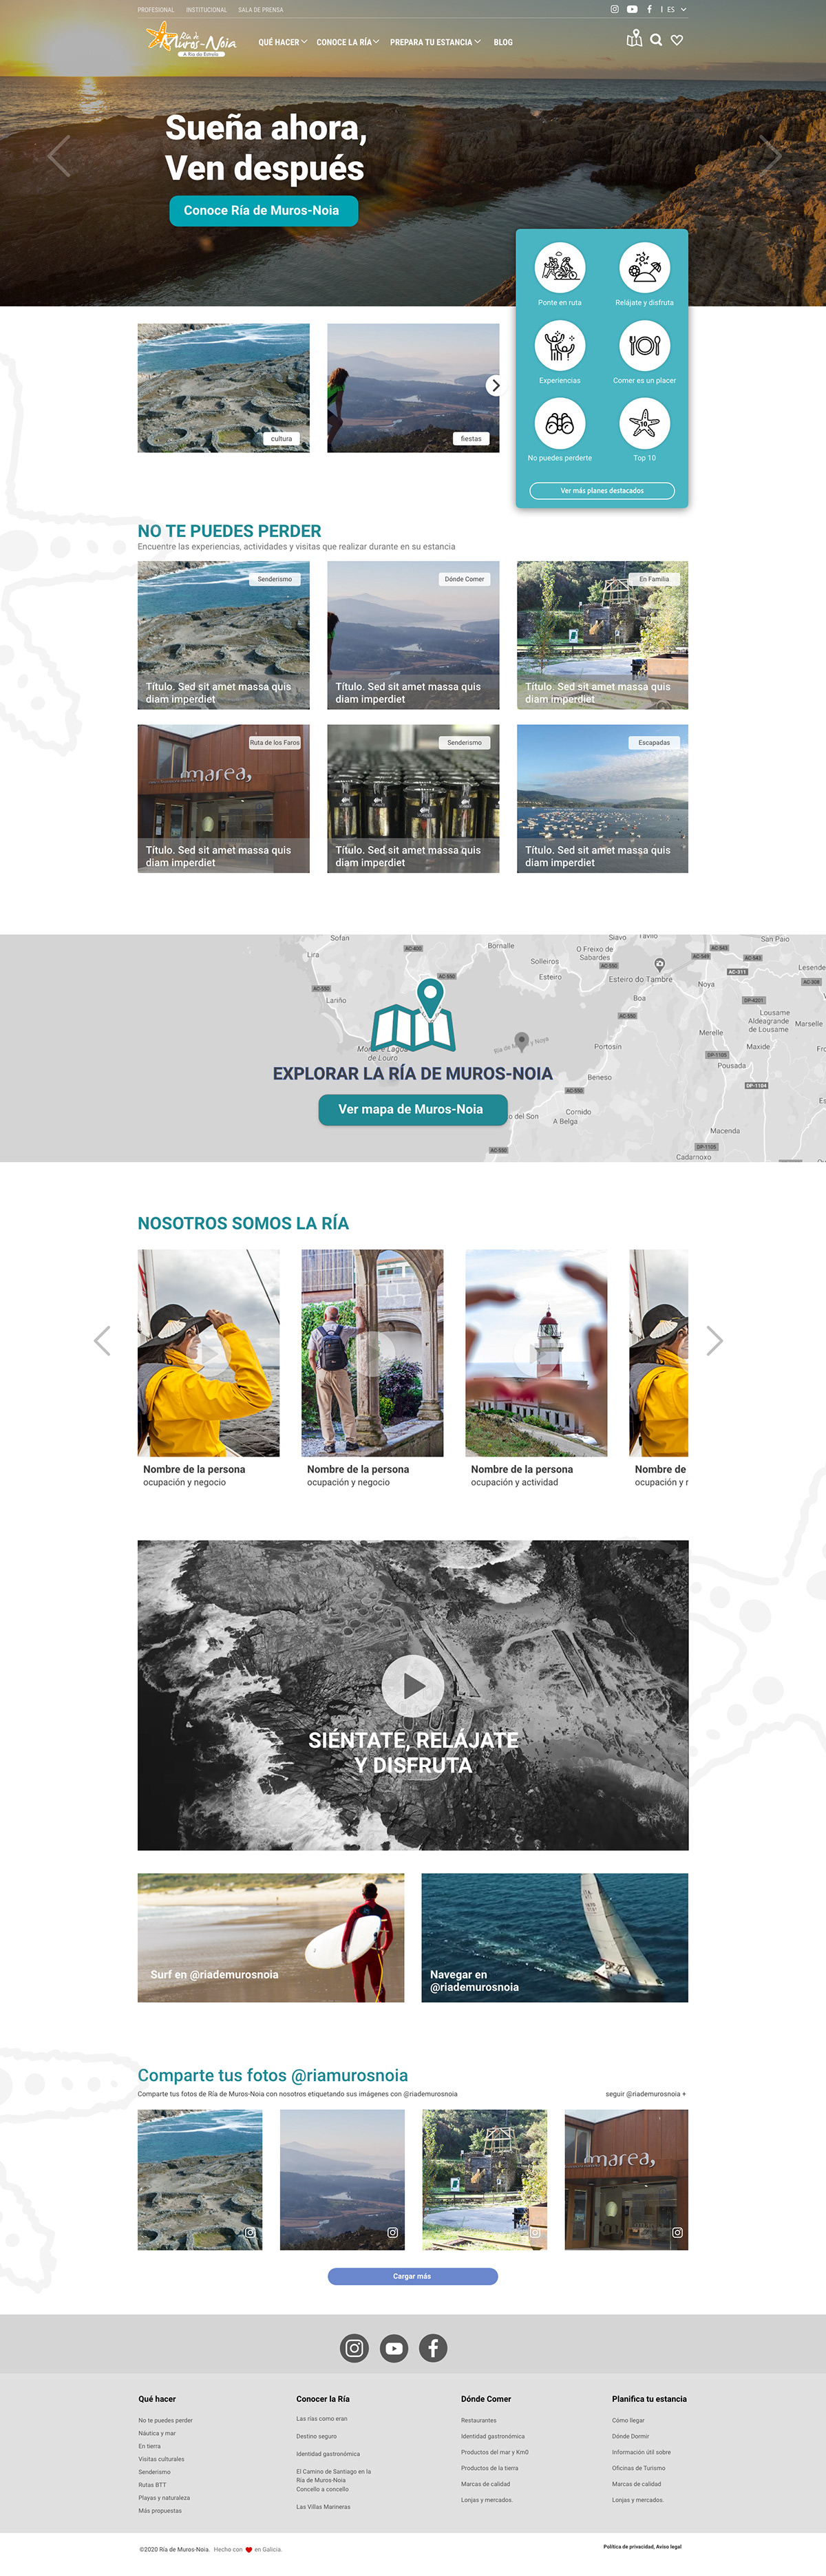 prototype touristic website ux/ui design